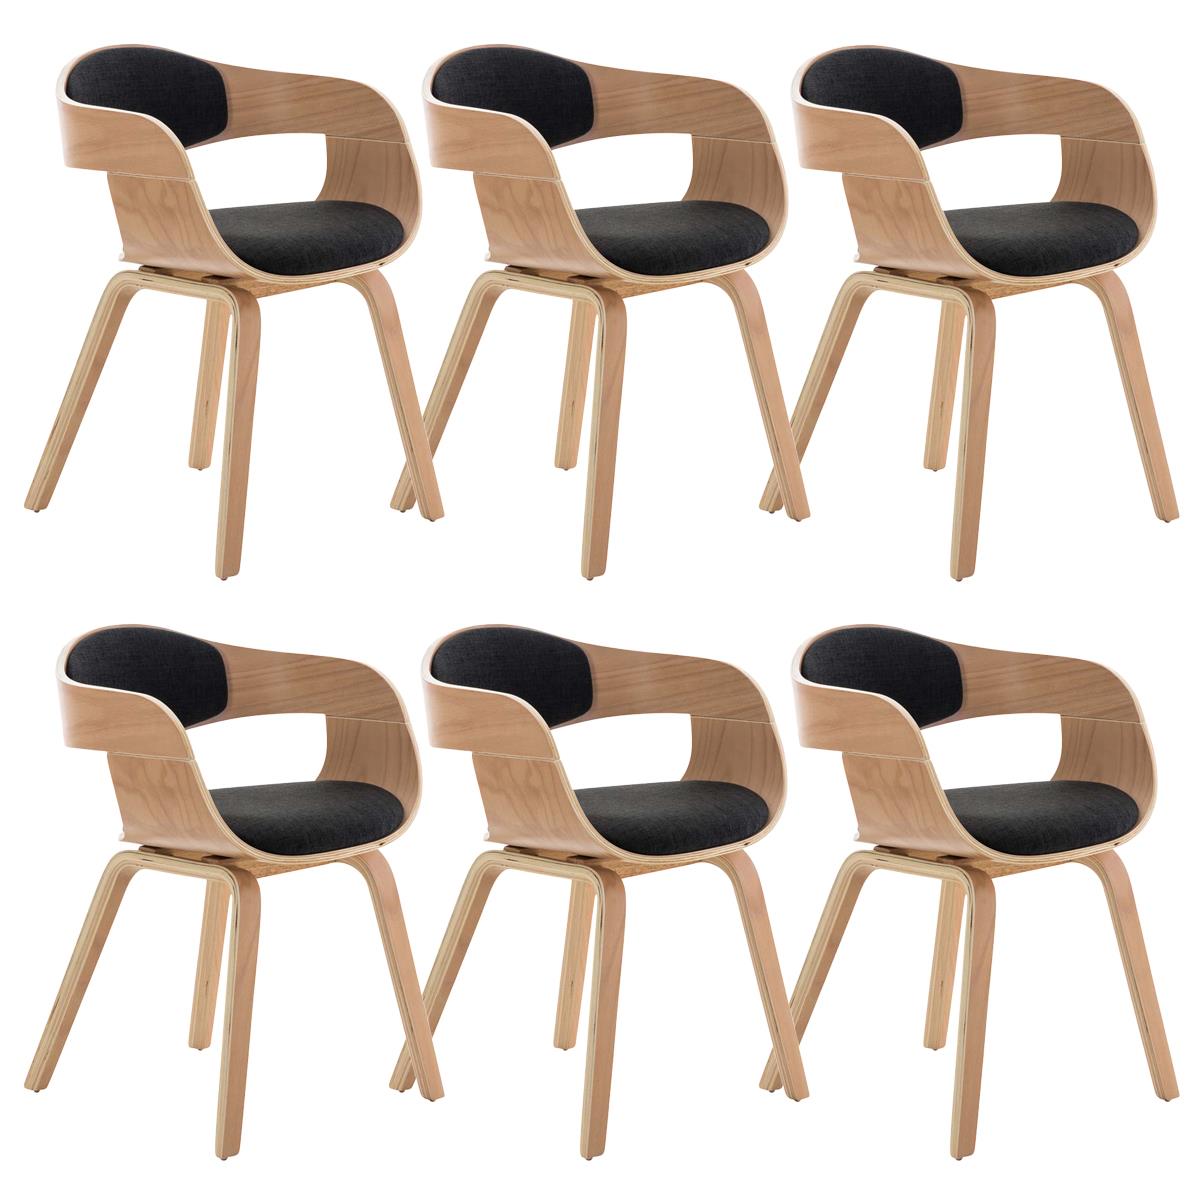 Lote de 6 sillas de Comedor BOLONIA, en Tela Gris Oscuro, Estructura de Madera color Natural